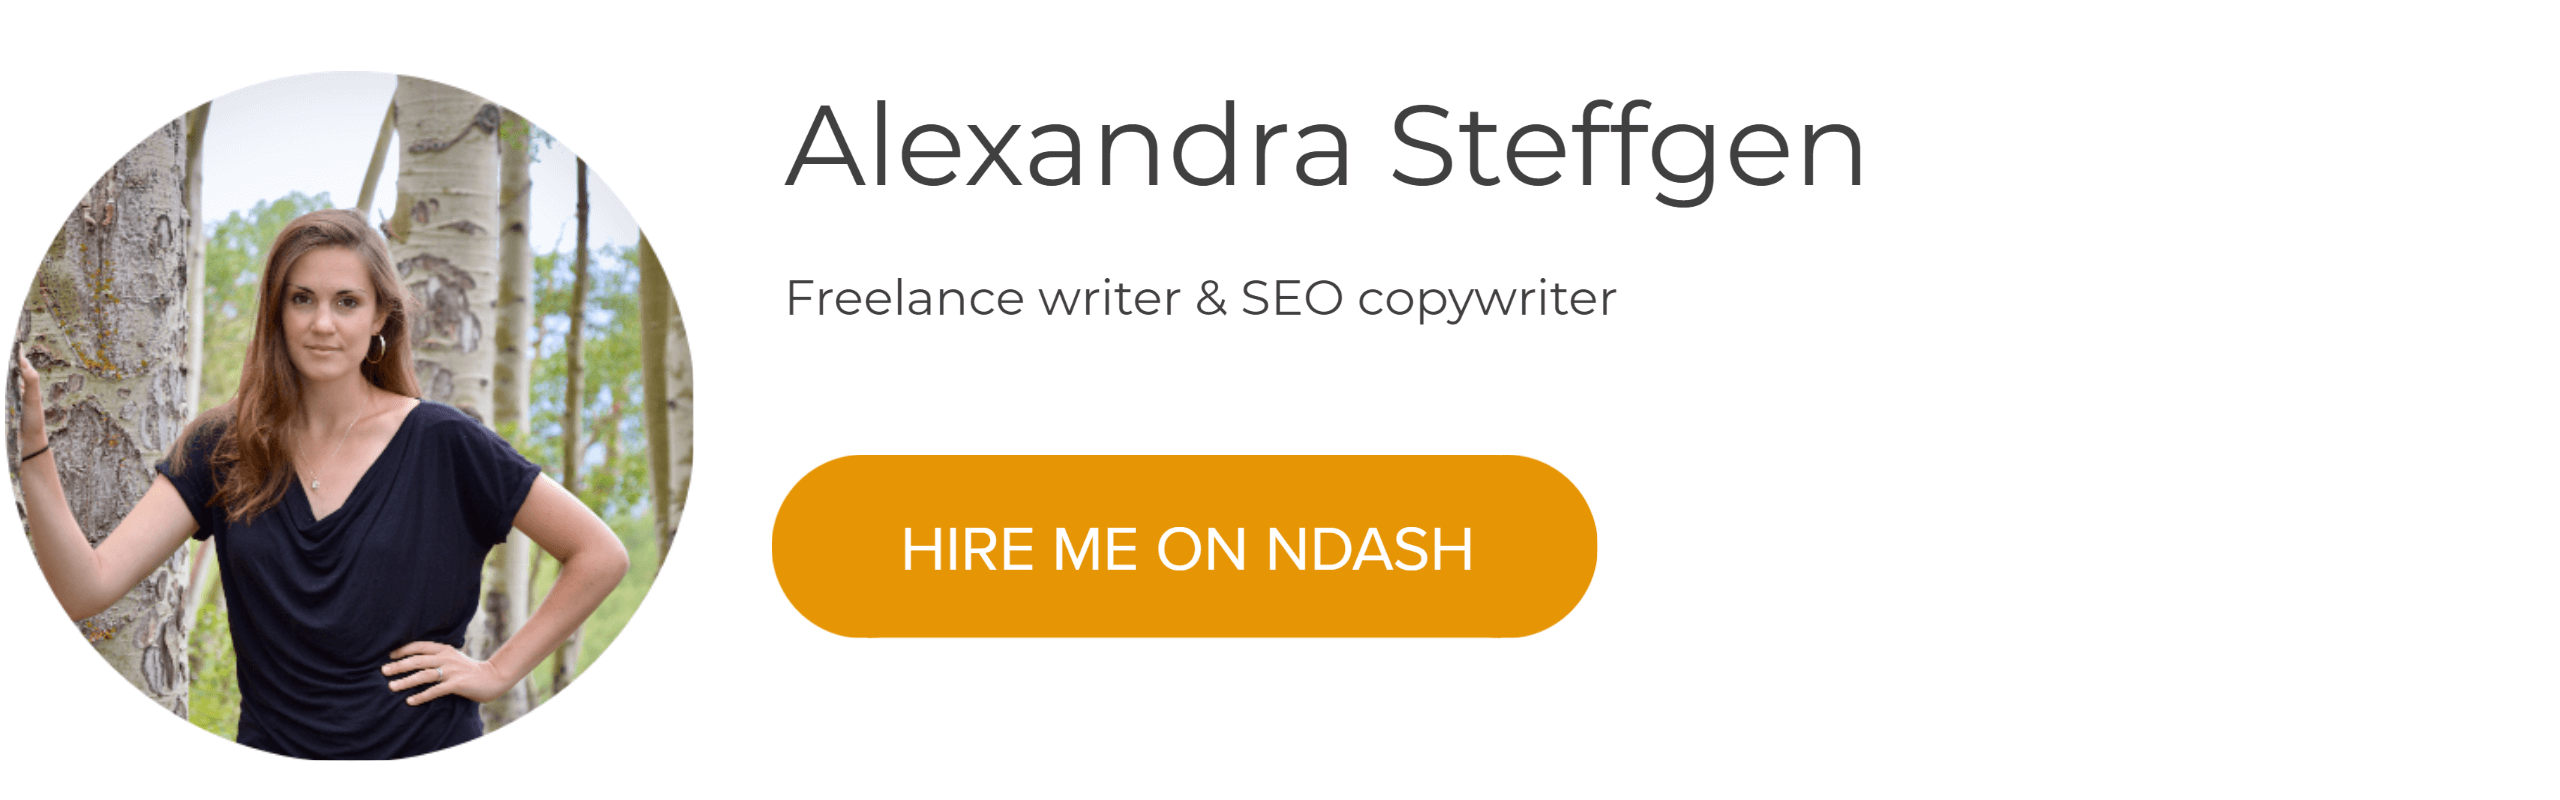 Wednesday Writer Roundup - Alexandra Steffgen: Freelance Writer & SEO Copywriter